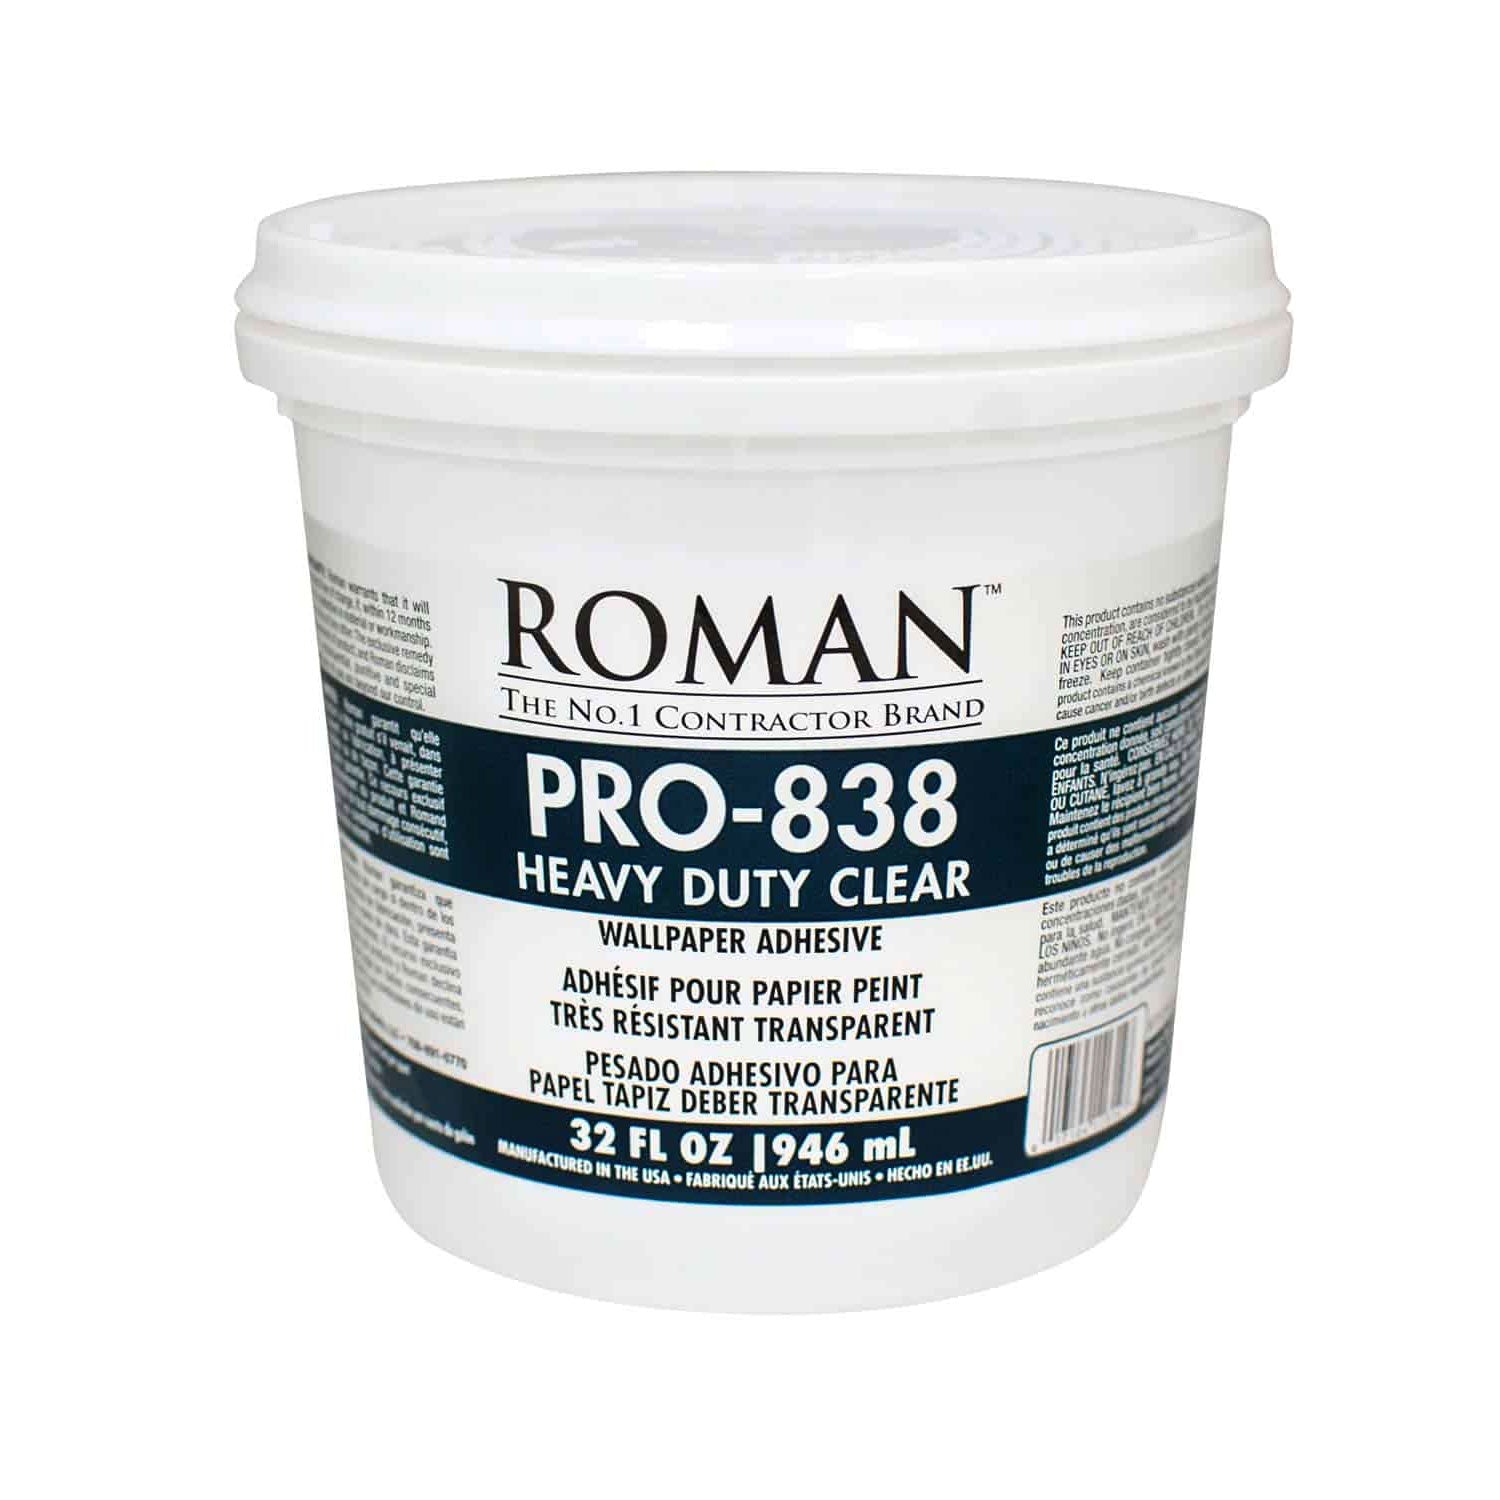  ROMAN Products: E-Z Hang Peel & Stick Helper